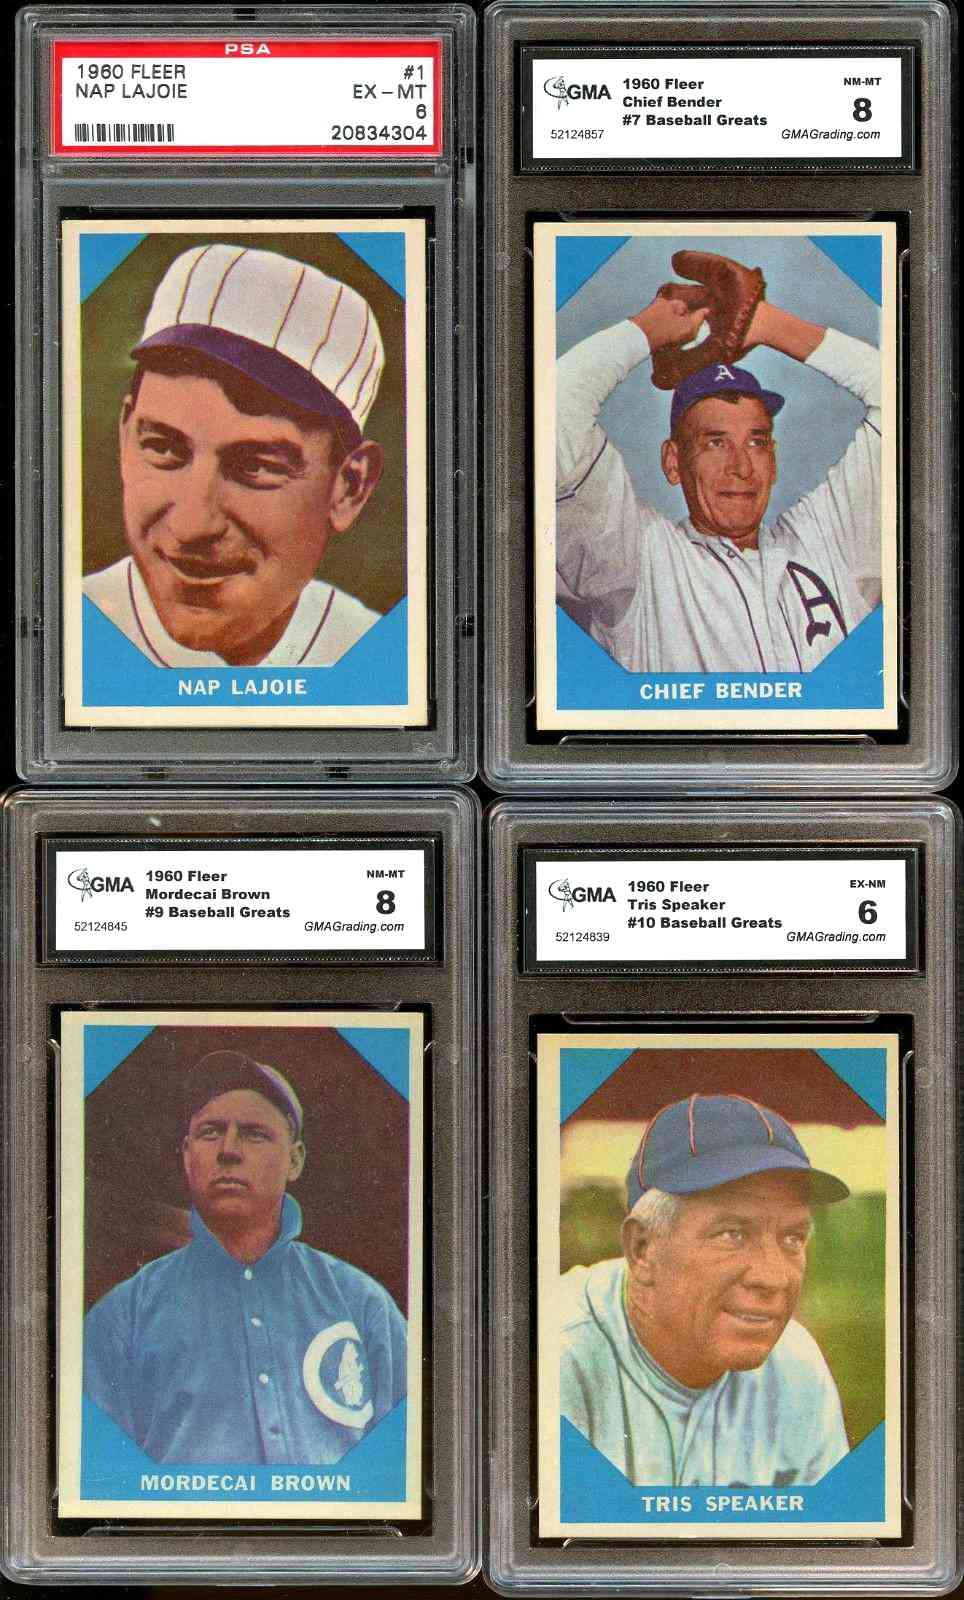 1960 Fleer #  1 Napoleon Lajoie [#xg] (Philadelphia A's) Baseball cards value